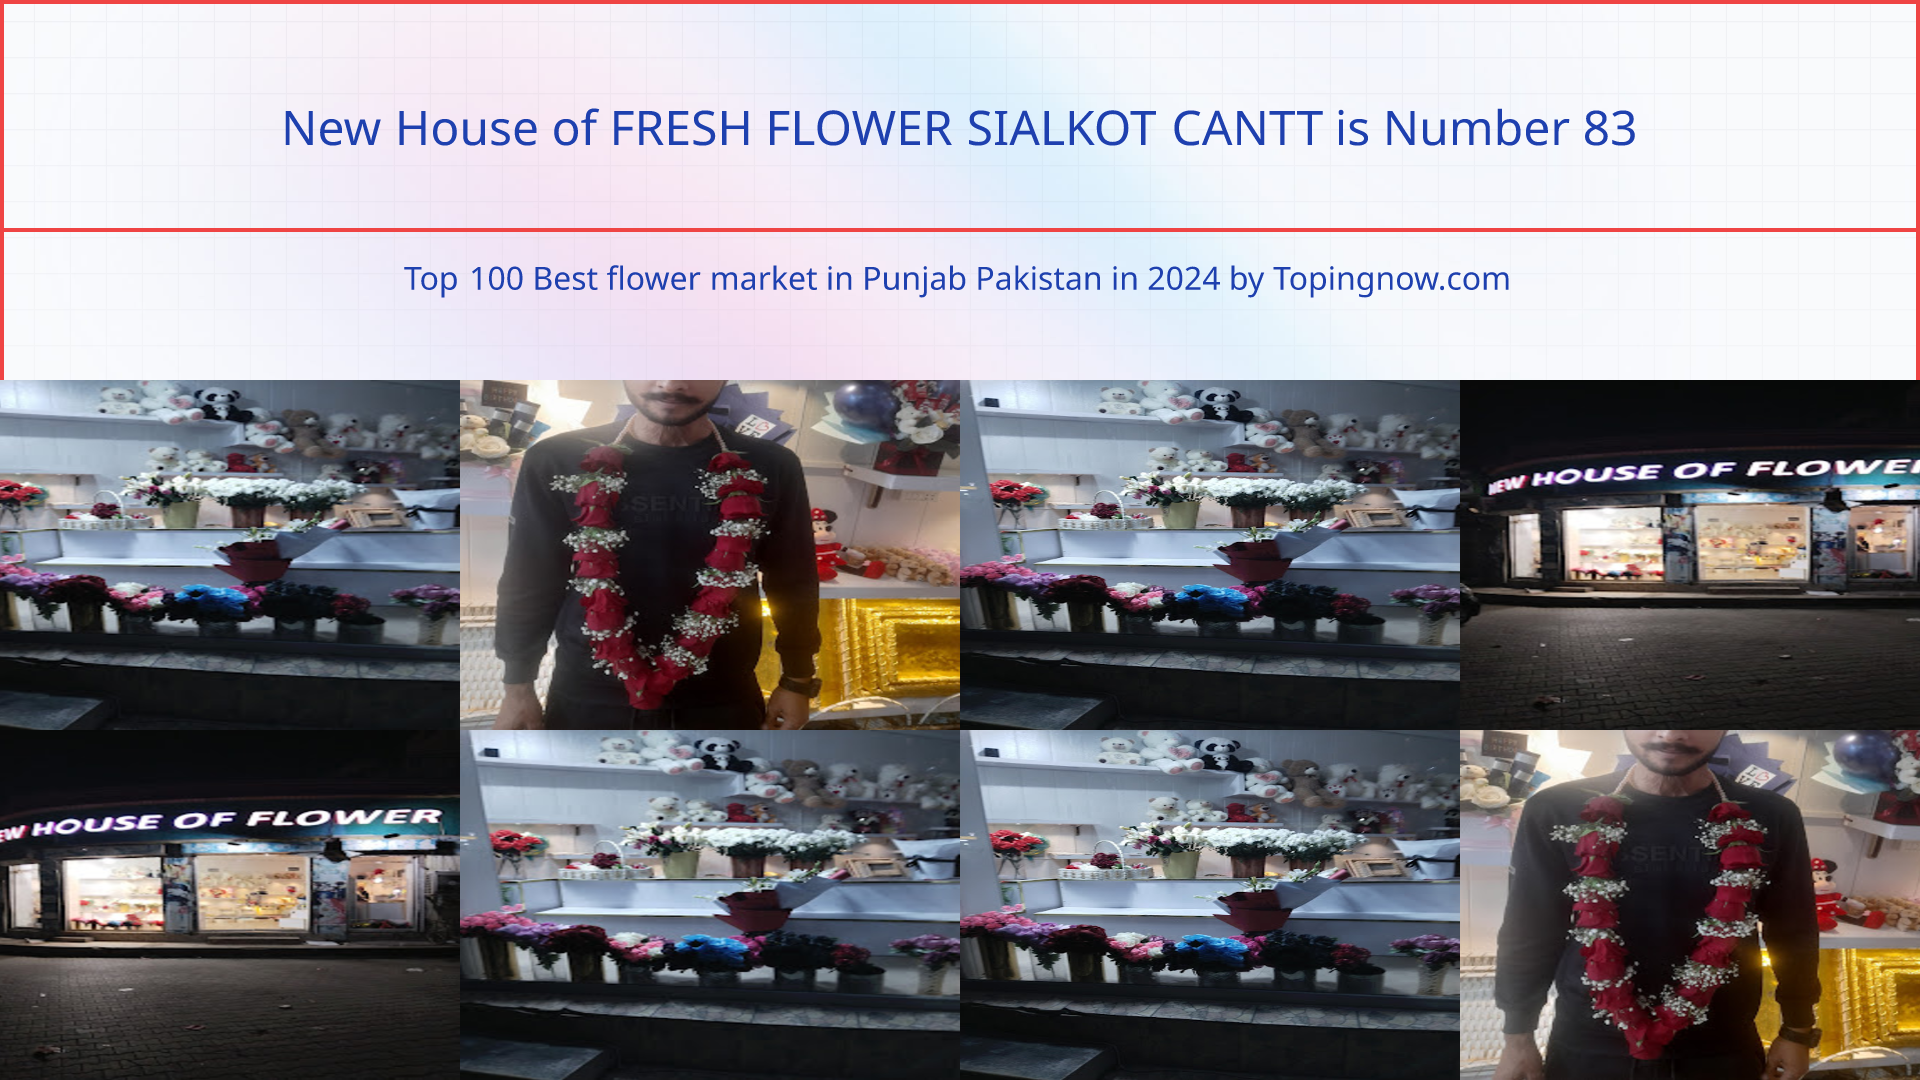 New House of FRESH FLOWER SIALKOT CANTT: Top 100 Best flower market in Punjab Pakistan in 2024